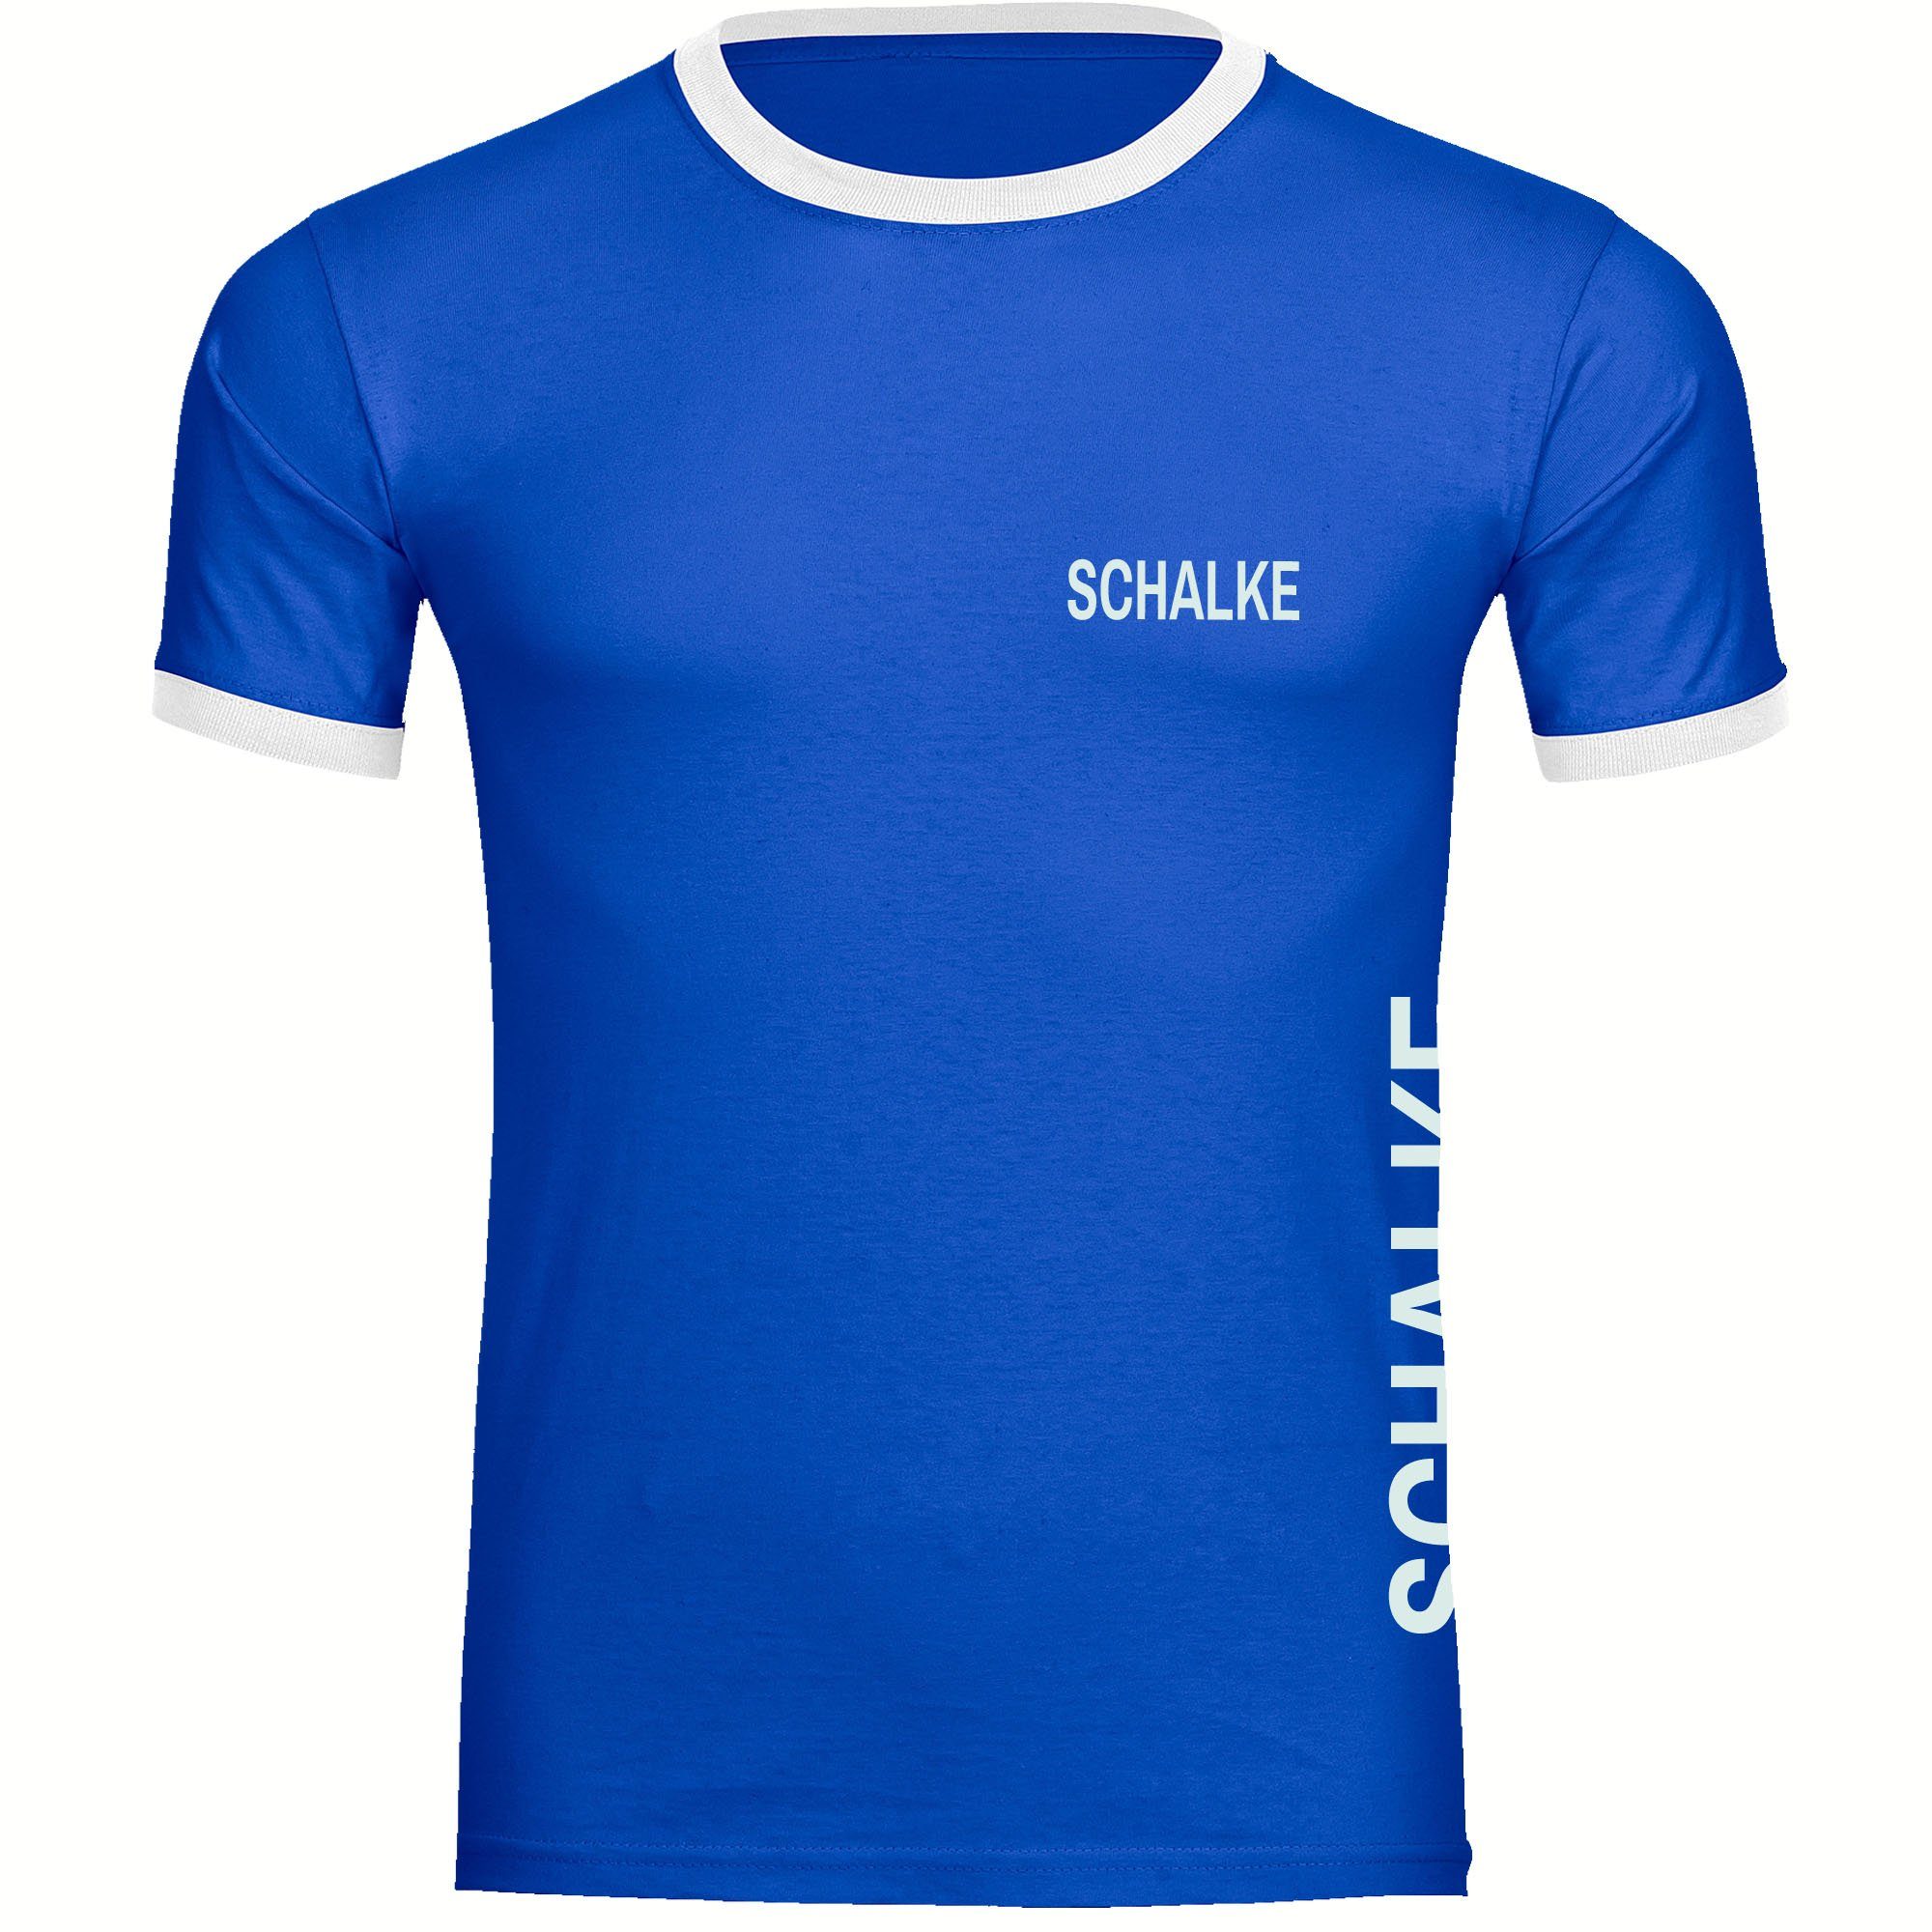 multifanshop T-Shirt Kontrast Schalke - Brust & Seite - Männer